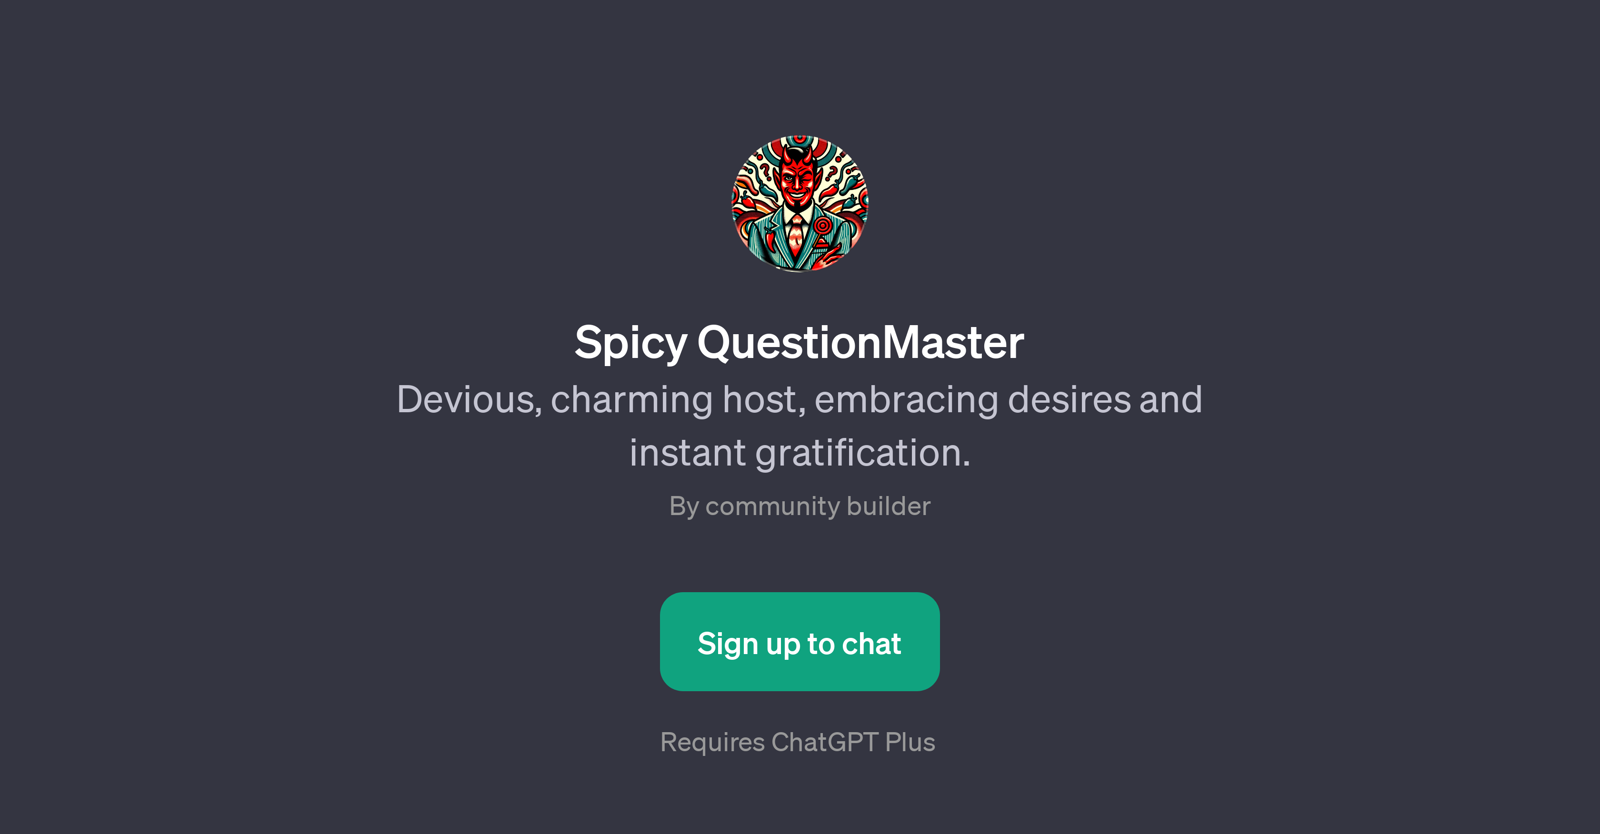 Spicy QuestionMaster website